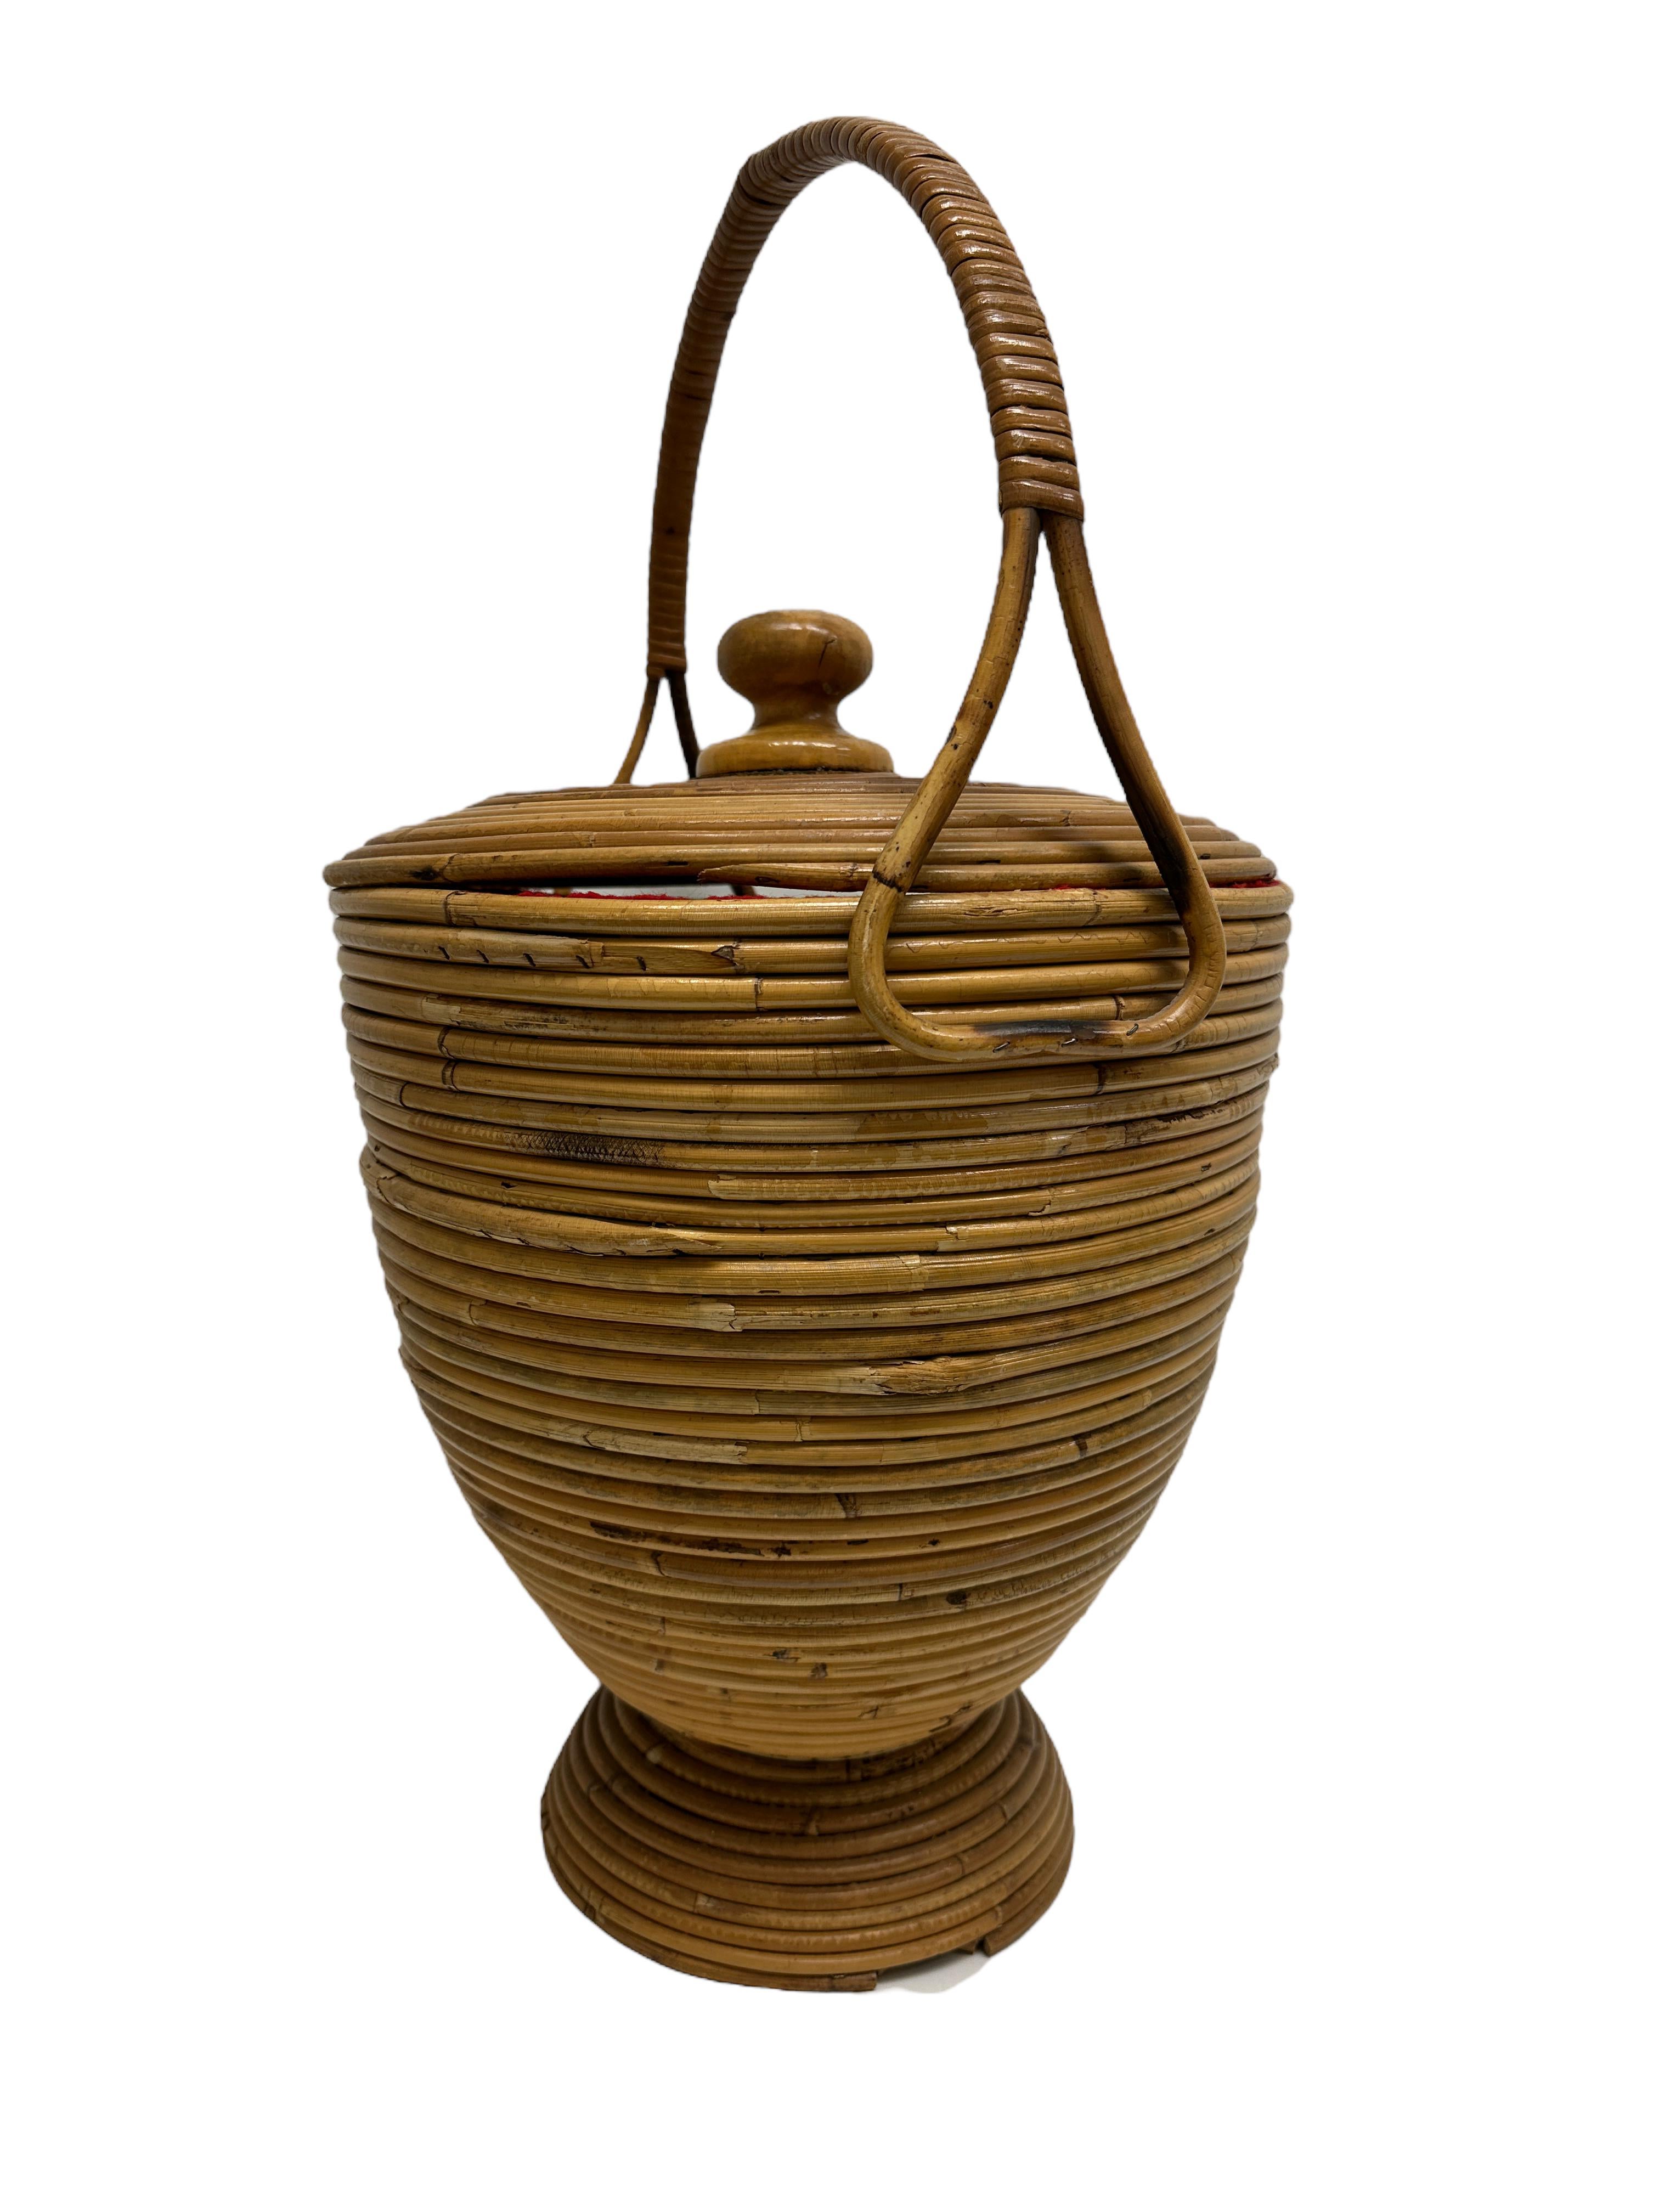 Italian Beautiful Vivai del Sud Bamboo Rattan Decorative Basket Catchall, 1970s, Italy For Sale